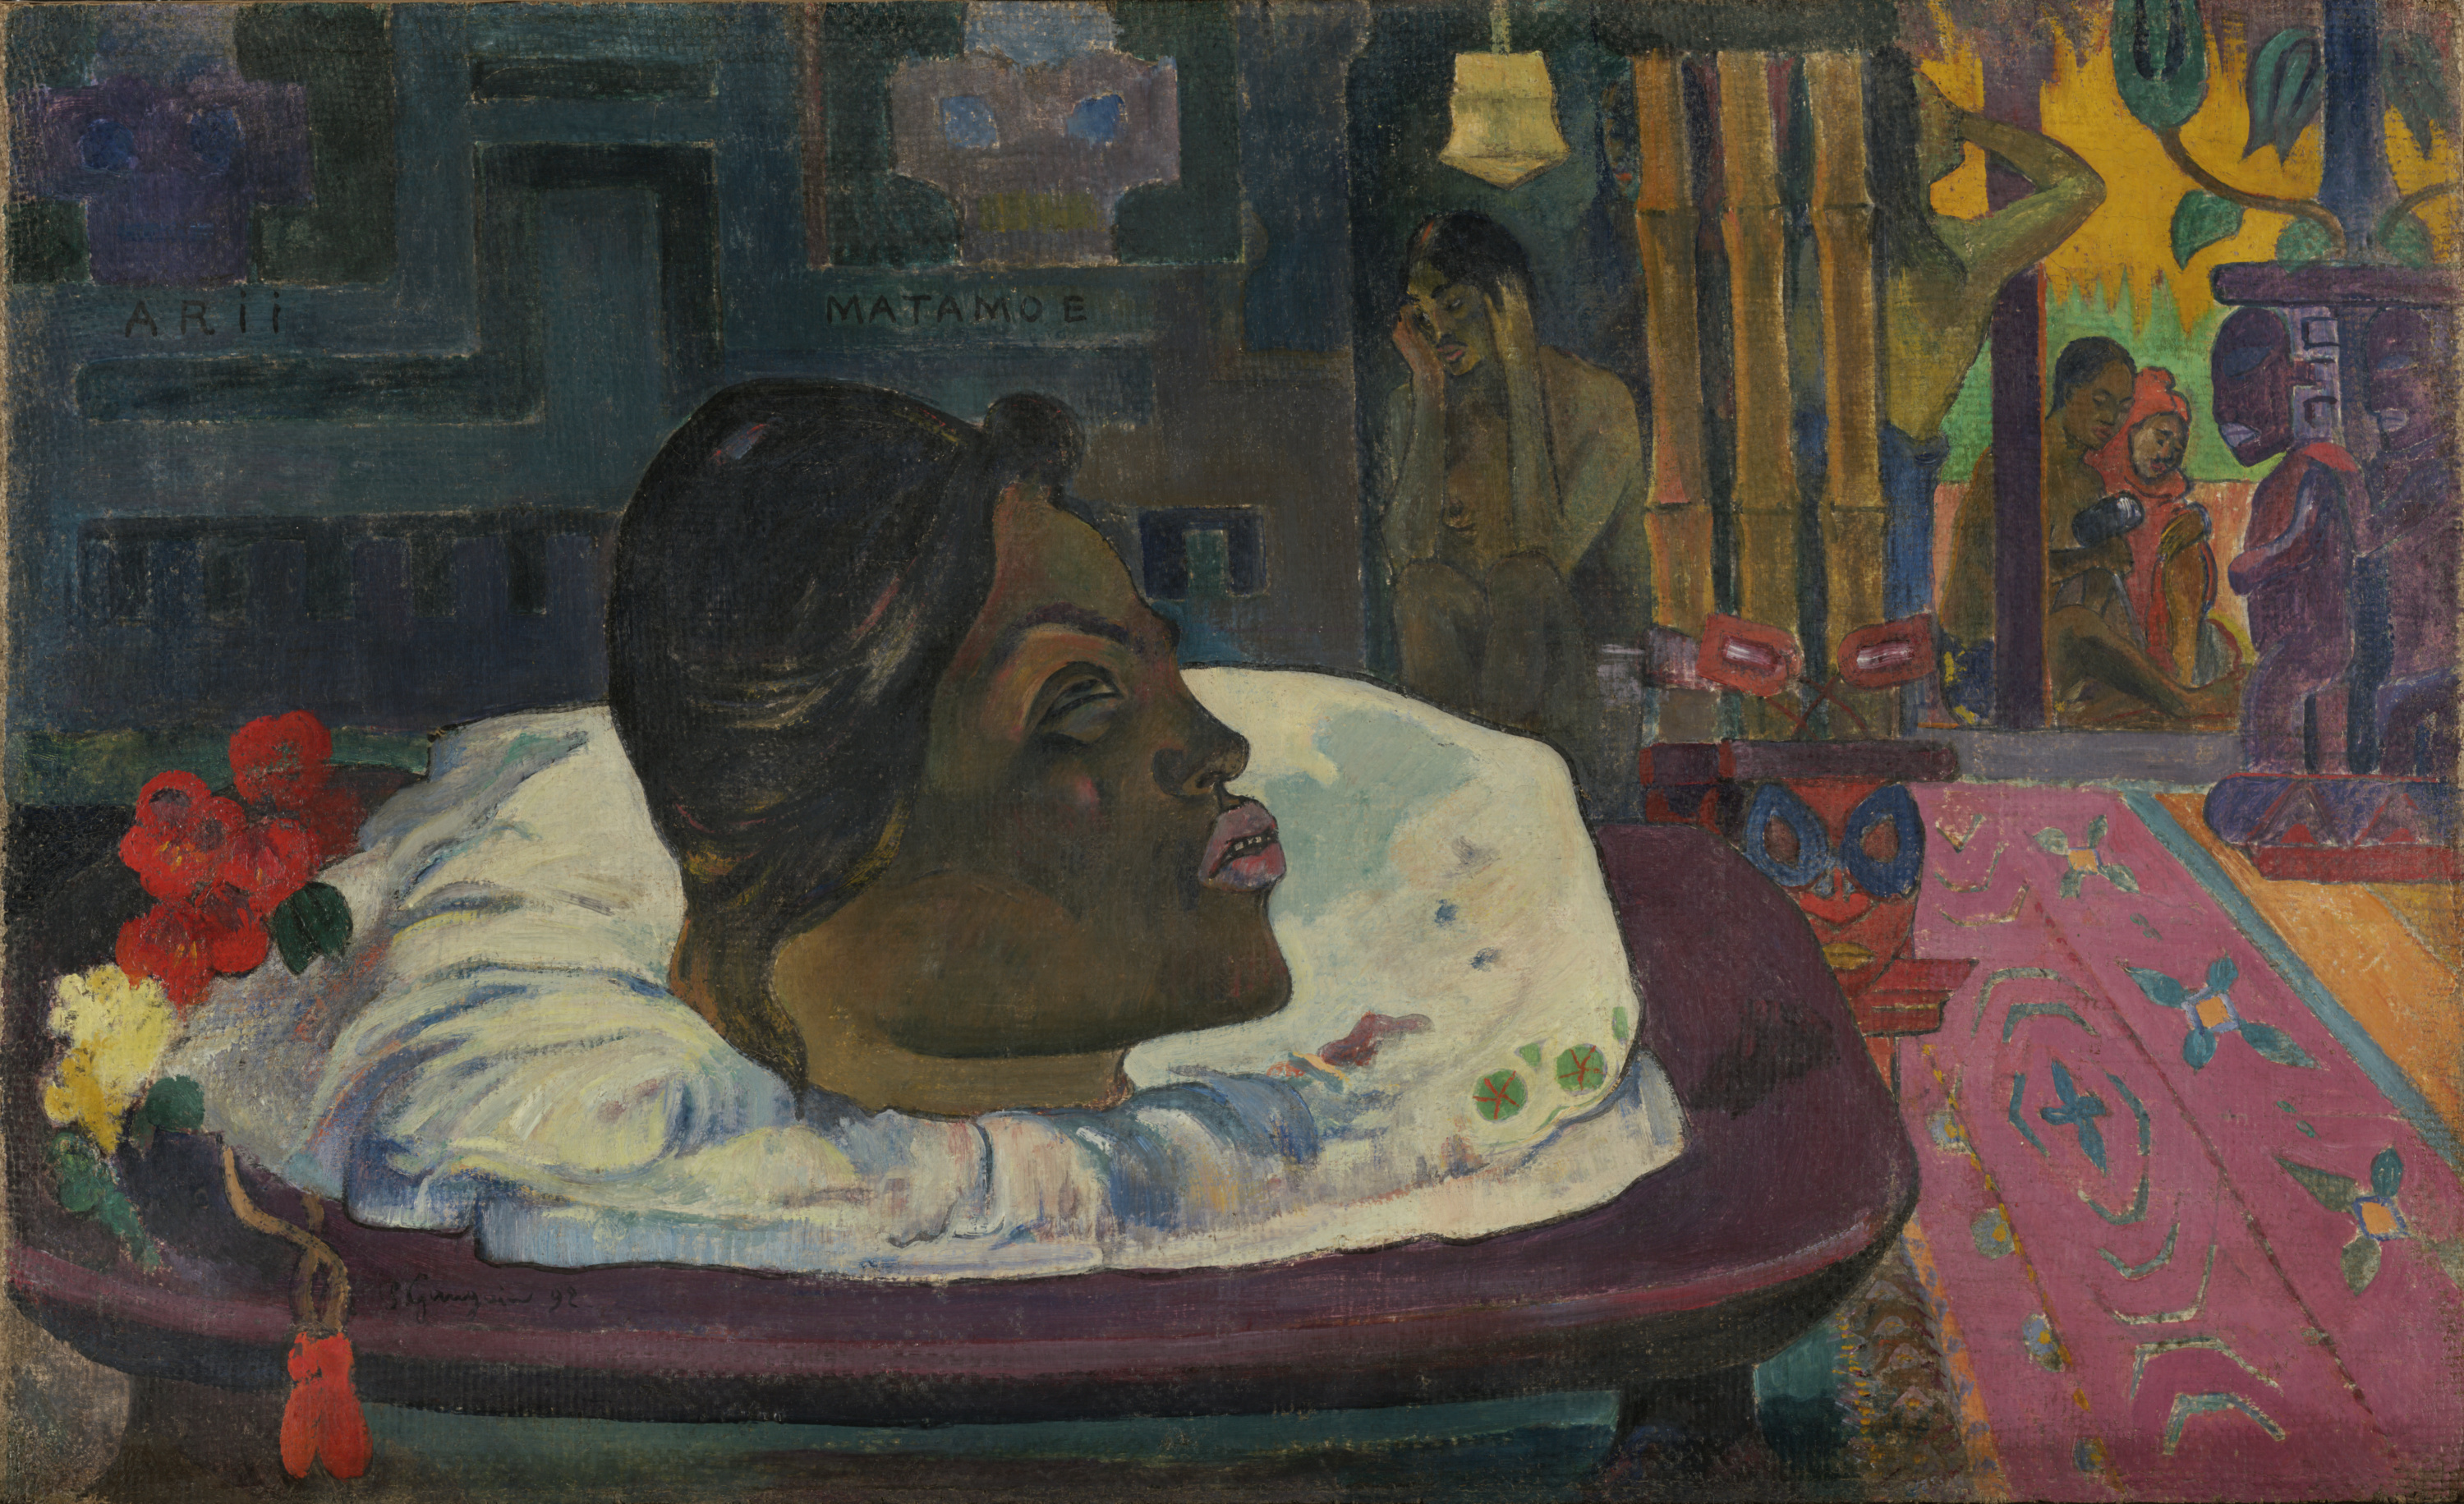 Arii Matamoe (El Fin Real) by Paul Gauguin - 1892 - 45.1 × 74.3 cm Museo J. Paul Getty